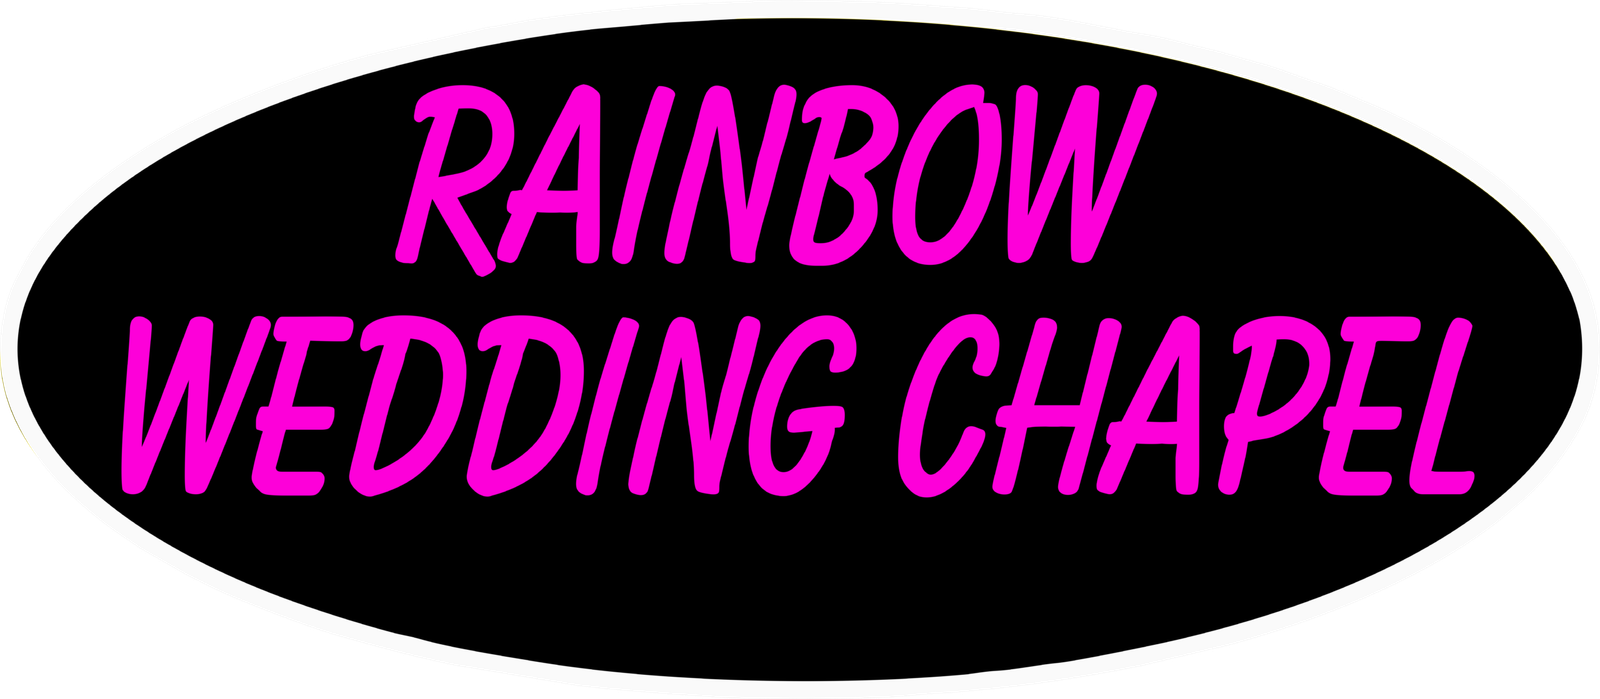 Colorful Rainbow Wedding Chapel sign.